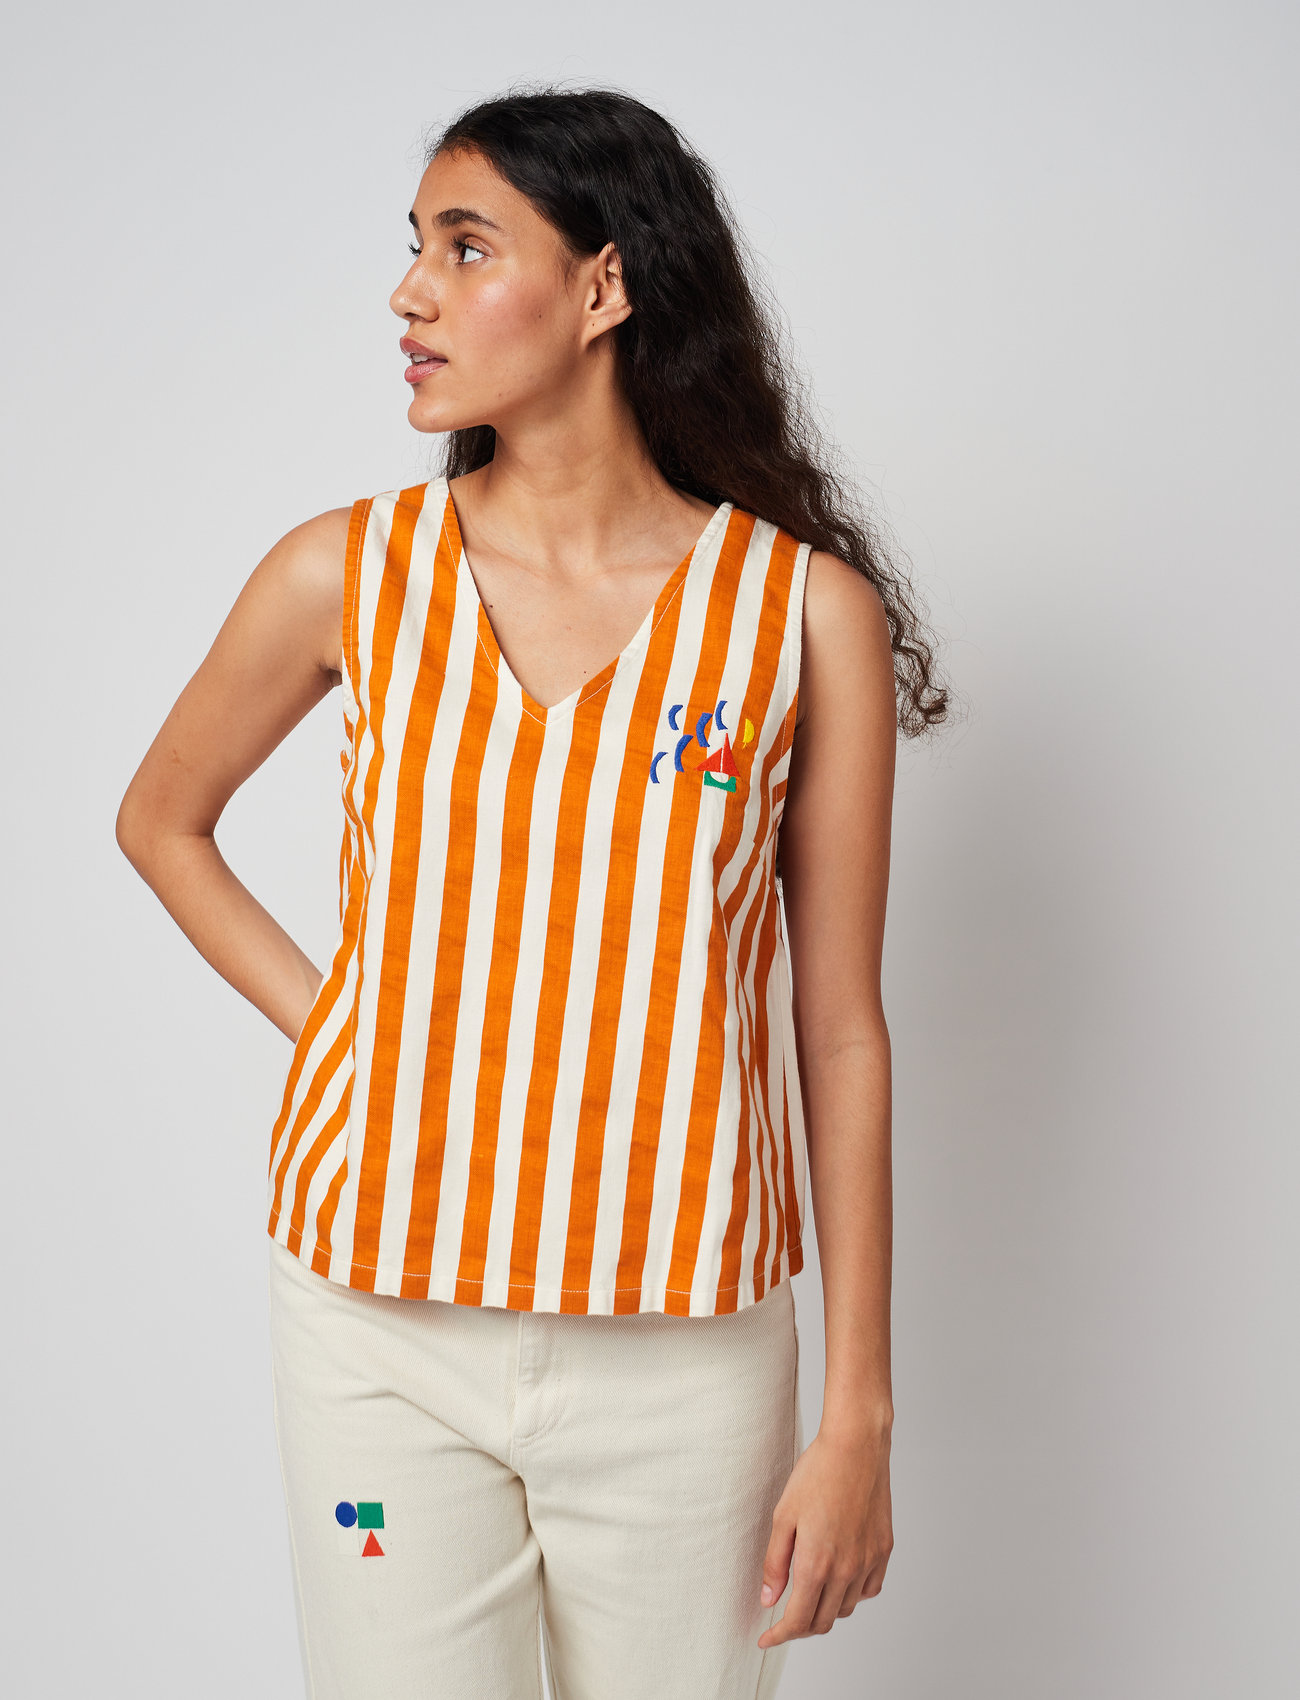 Bobo Choses - Nautical Print Stripe Sleeveless Top - orange - 0